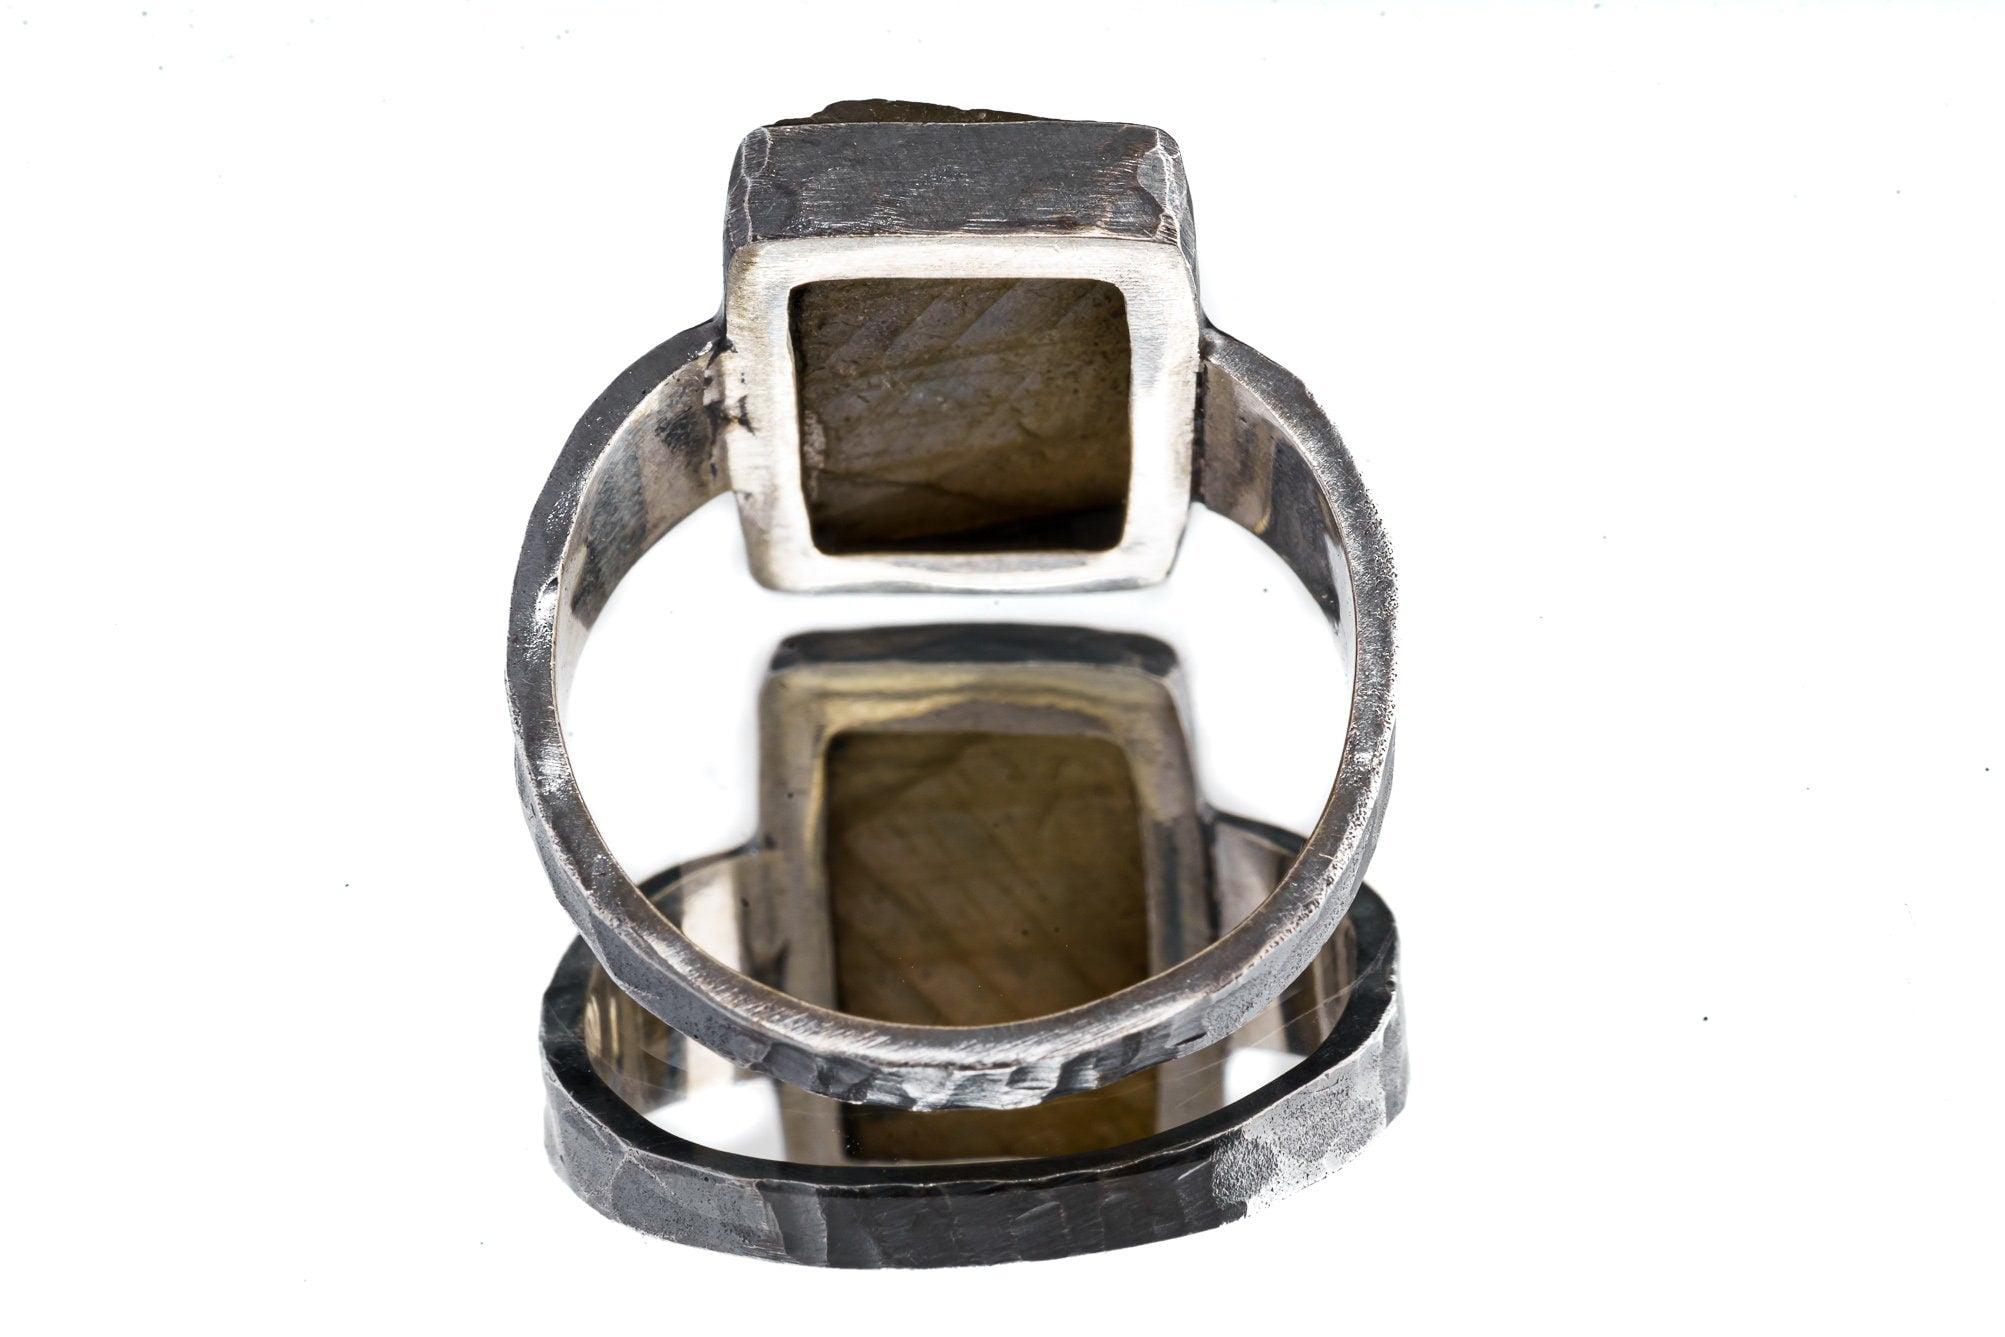 Freeform Raw Labradorite - Unisex / Men - Large Crystal Ring - Size 14 US - 925 Sterling Silver - Hammer Textured & Oxidised